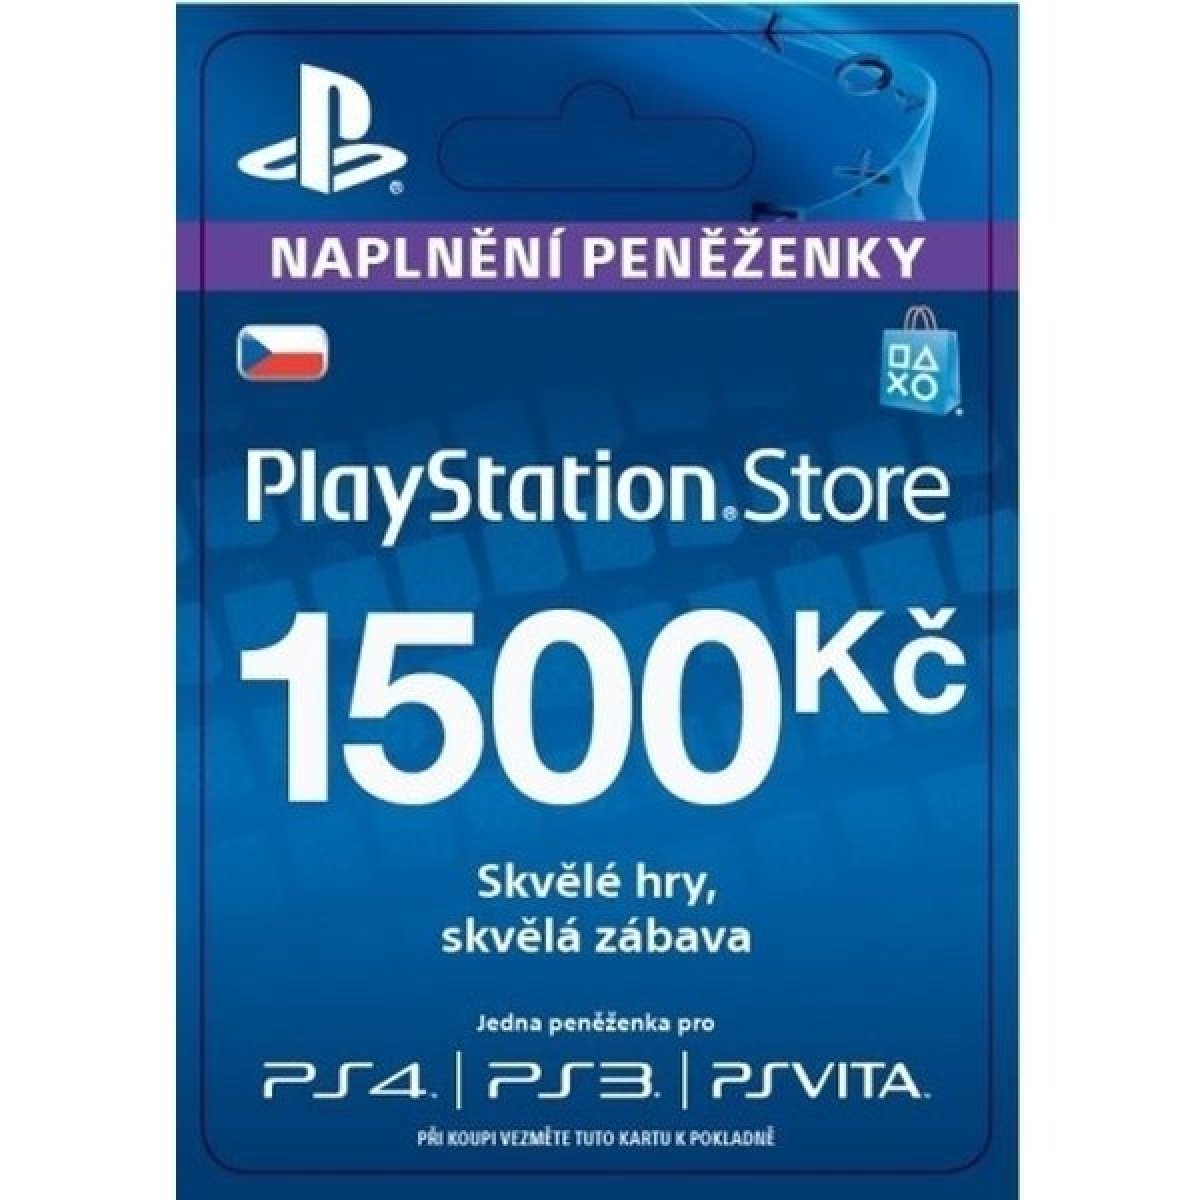 PlayStation Store predplatená karta 1500 Kč od 43 € - Heureka.sk